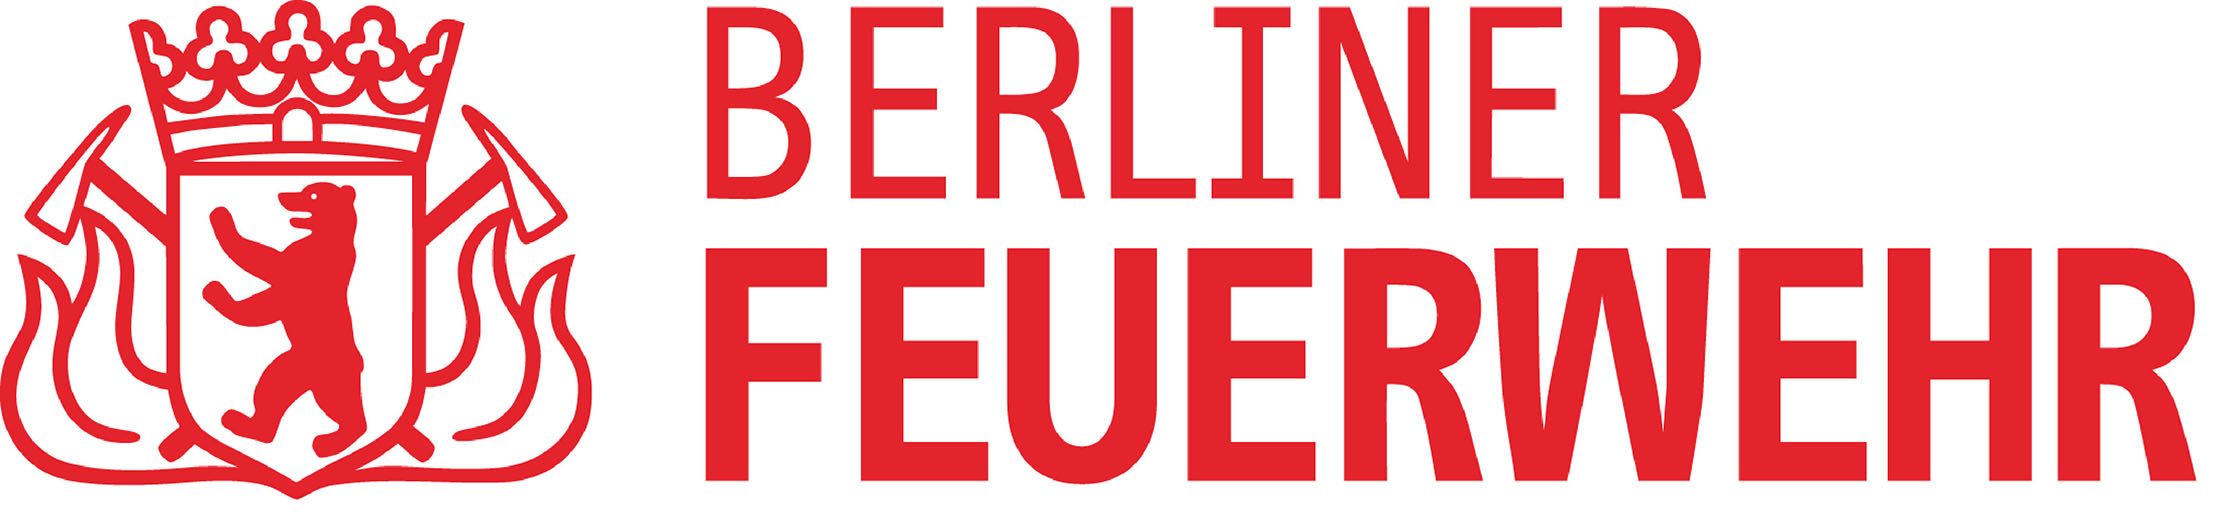 Berliner Feuerwehr Logo